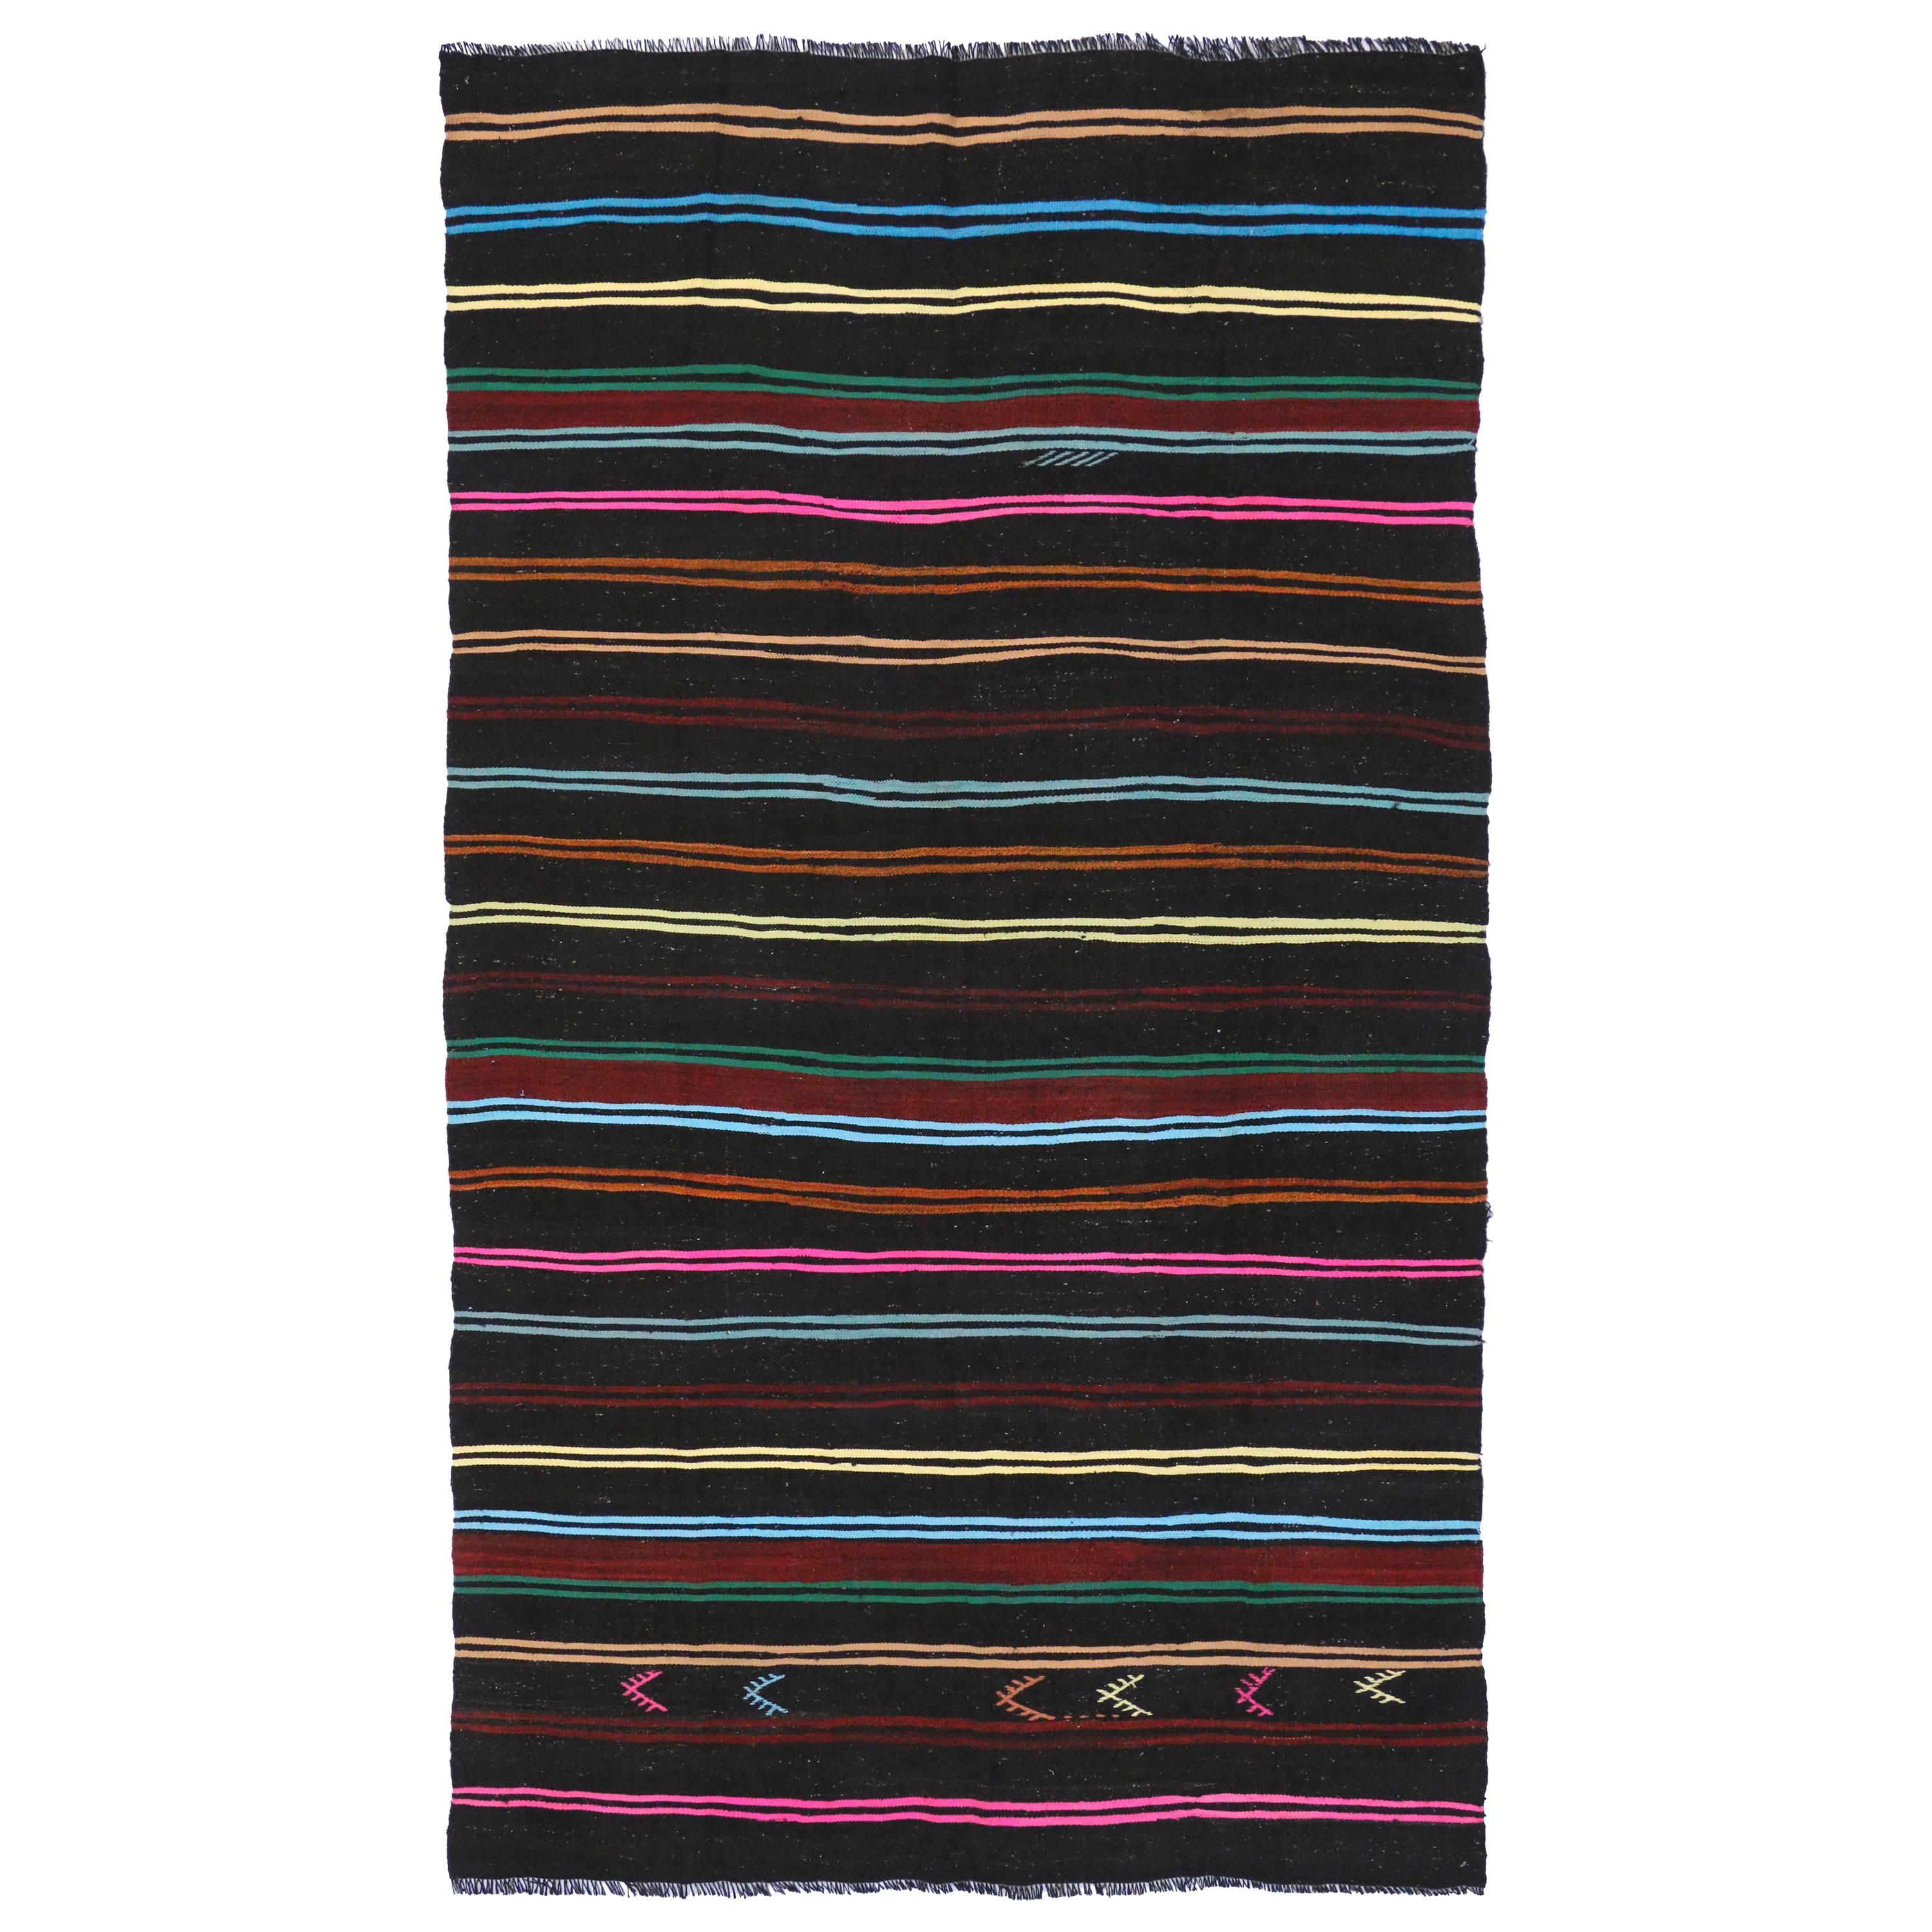 Vintage Turkish Kilim with Tribal Style, Flat-weave Striped Kilim Area Rug